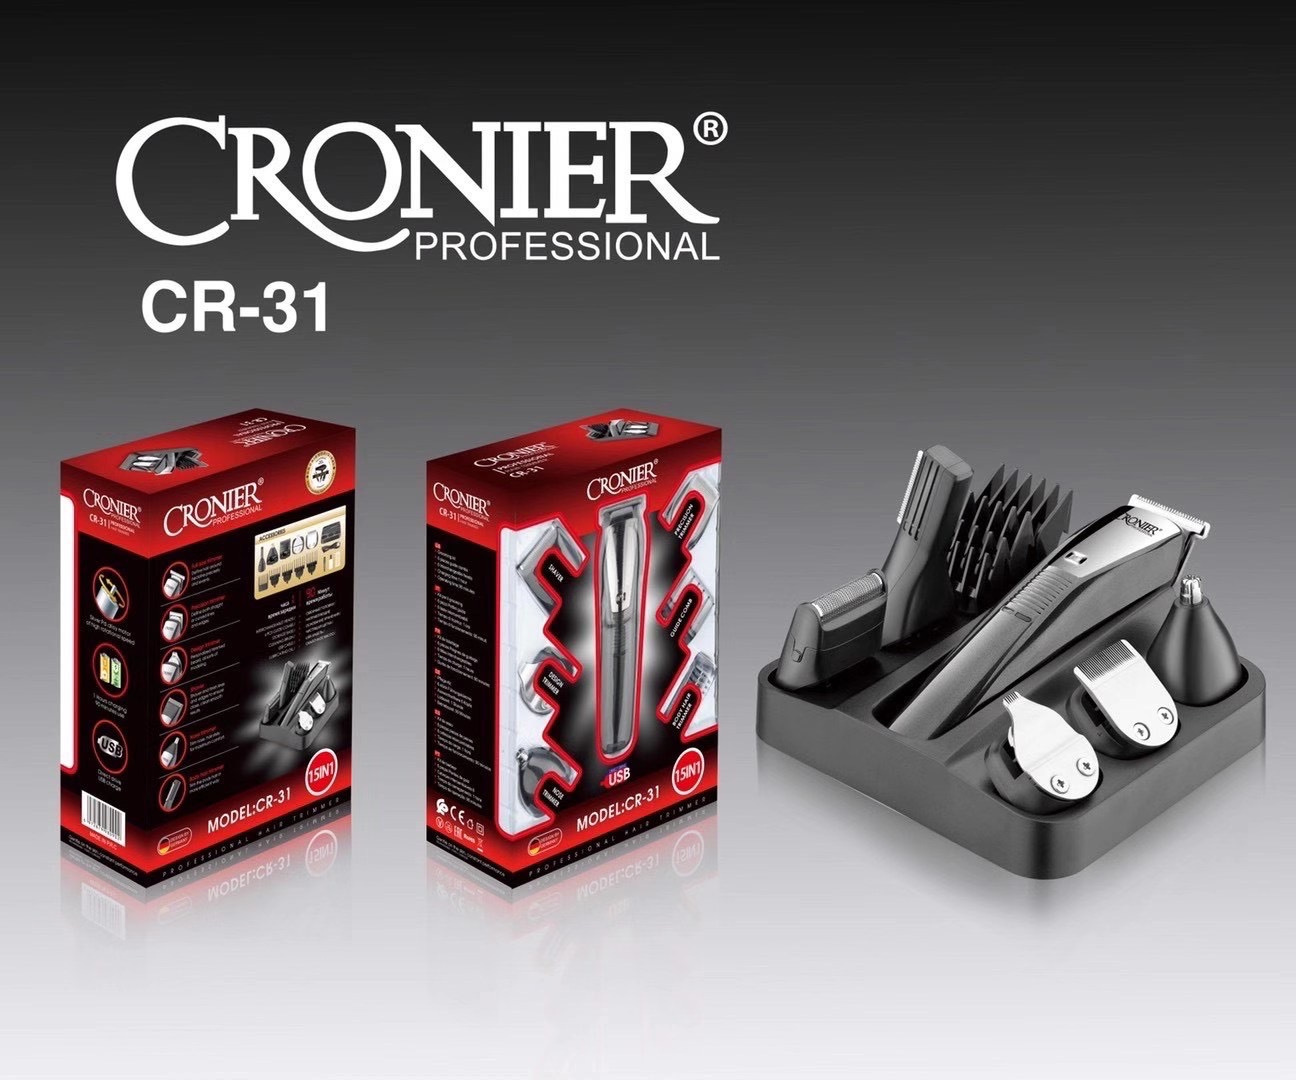 CRONIER CR-31 家用电推剪个人护理全套15合1多功能理发器 雕刻剪详情图1